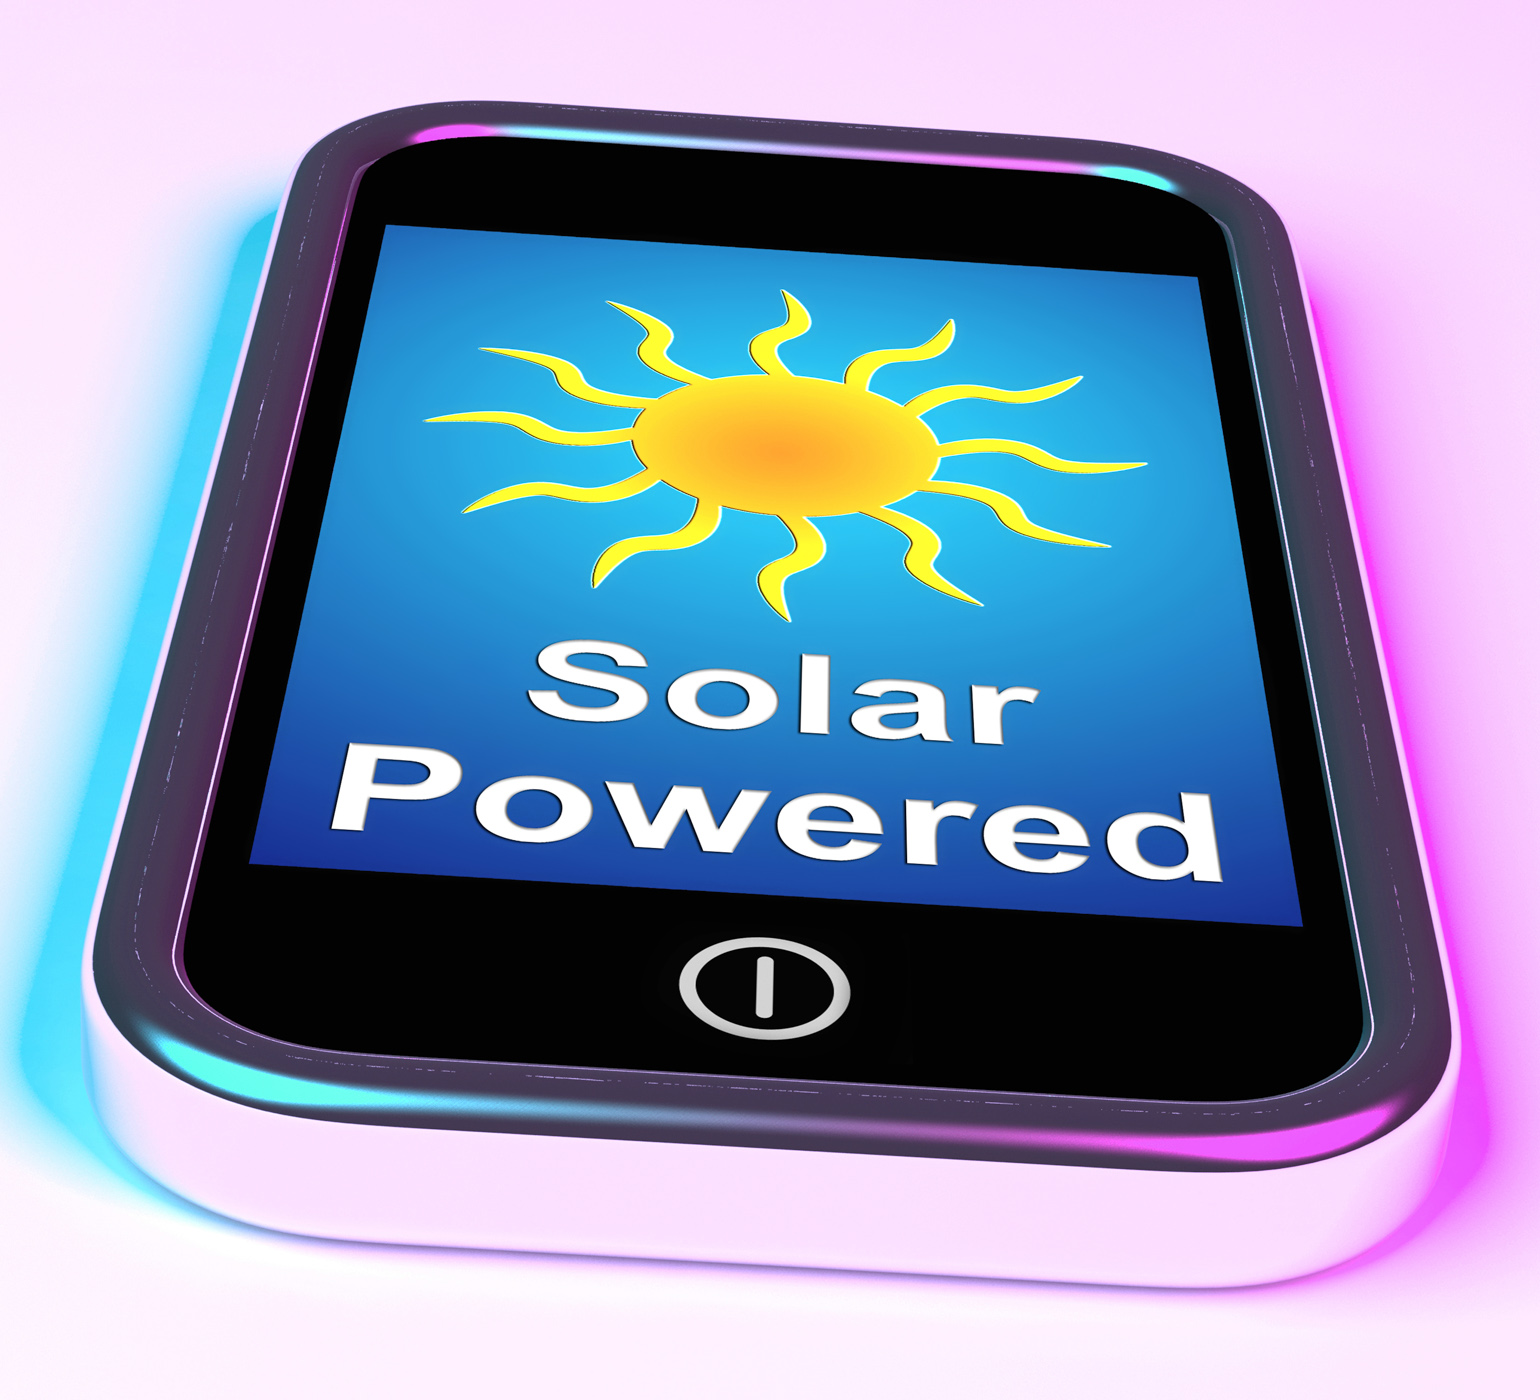 Solar powered on phone shows alternative energy and sunlight photo